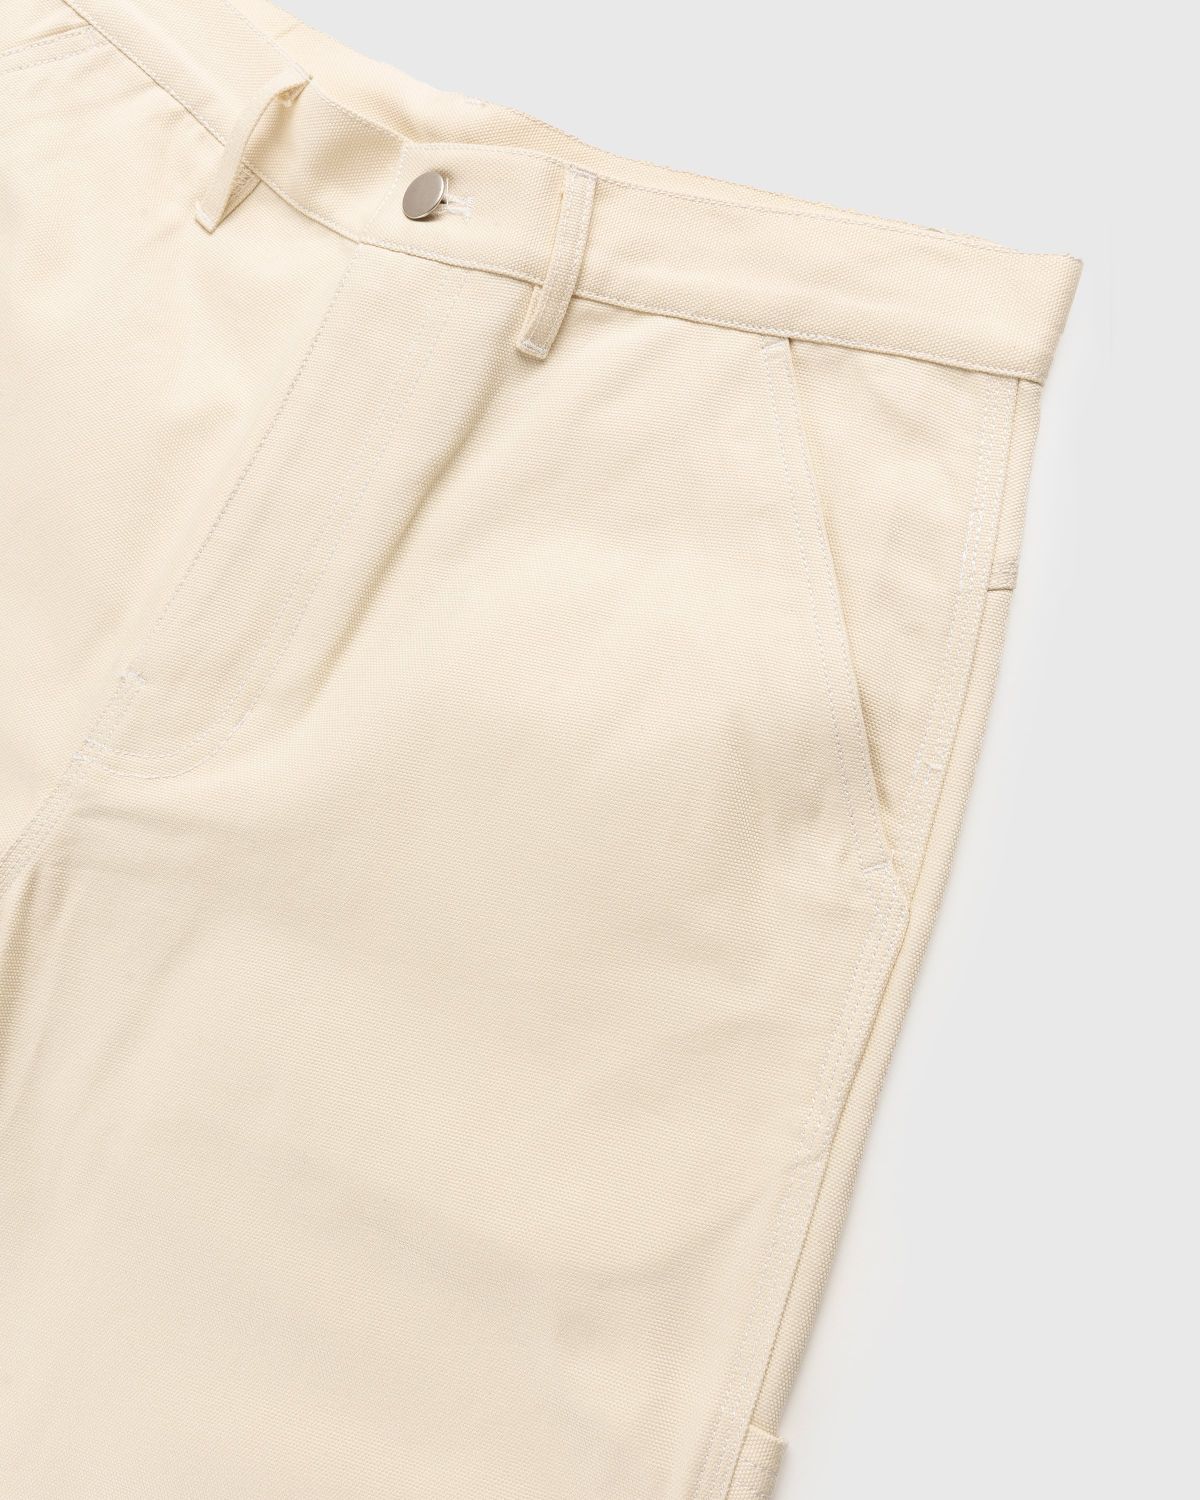 RUF x Highsnobiety – Cotton Work Pants Natural | Highsnobiety Shop